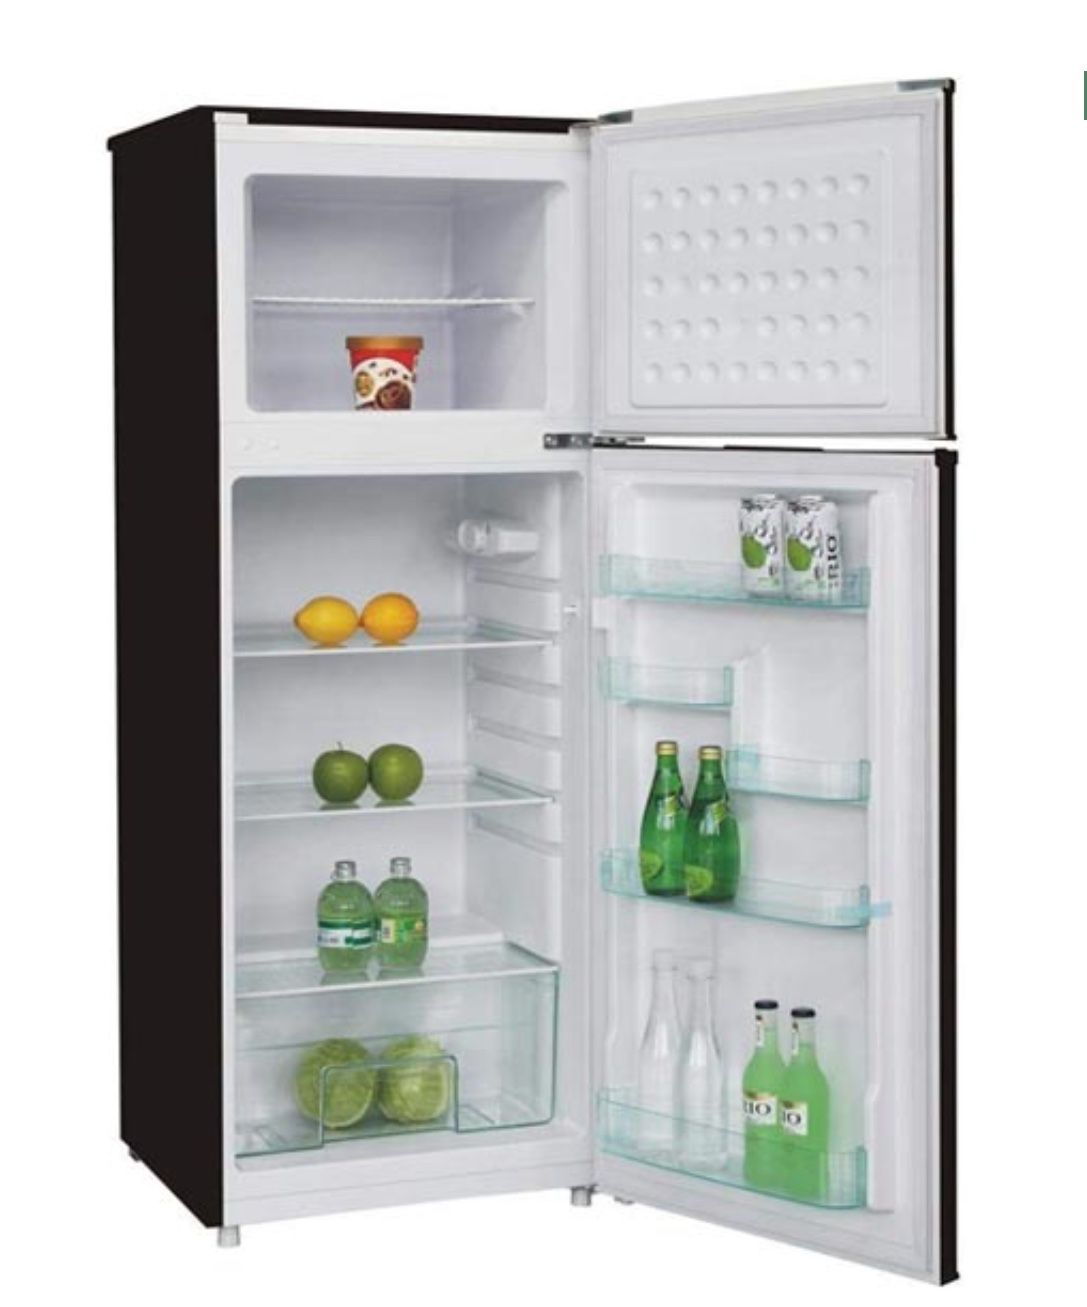 Brand new! Thomson 7.5 cu. ft. Mini Refrigerator